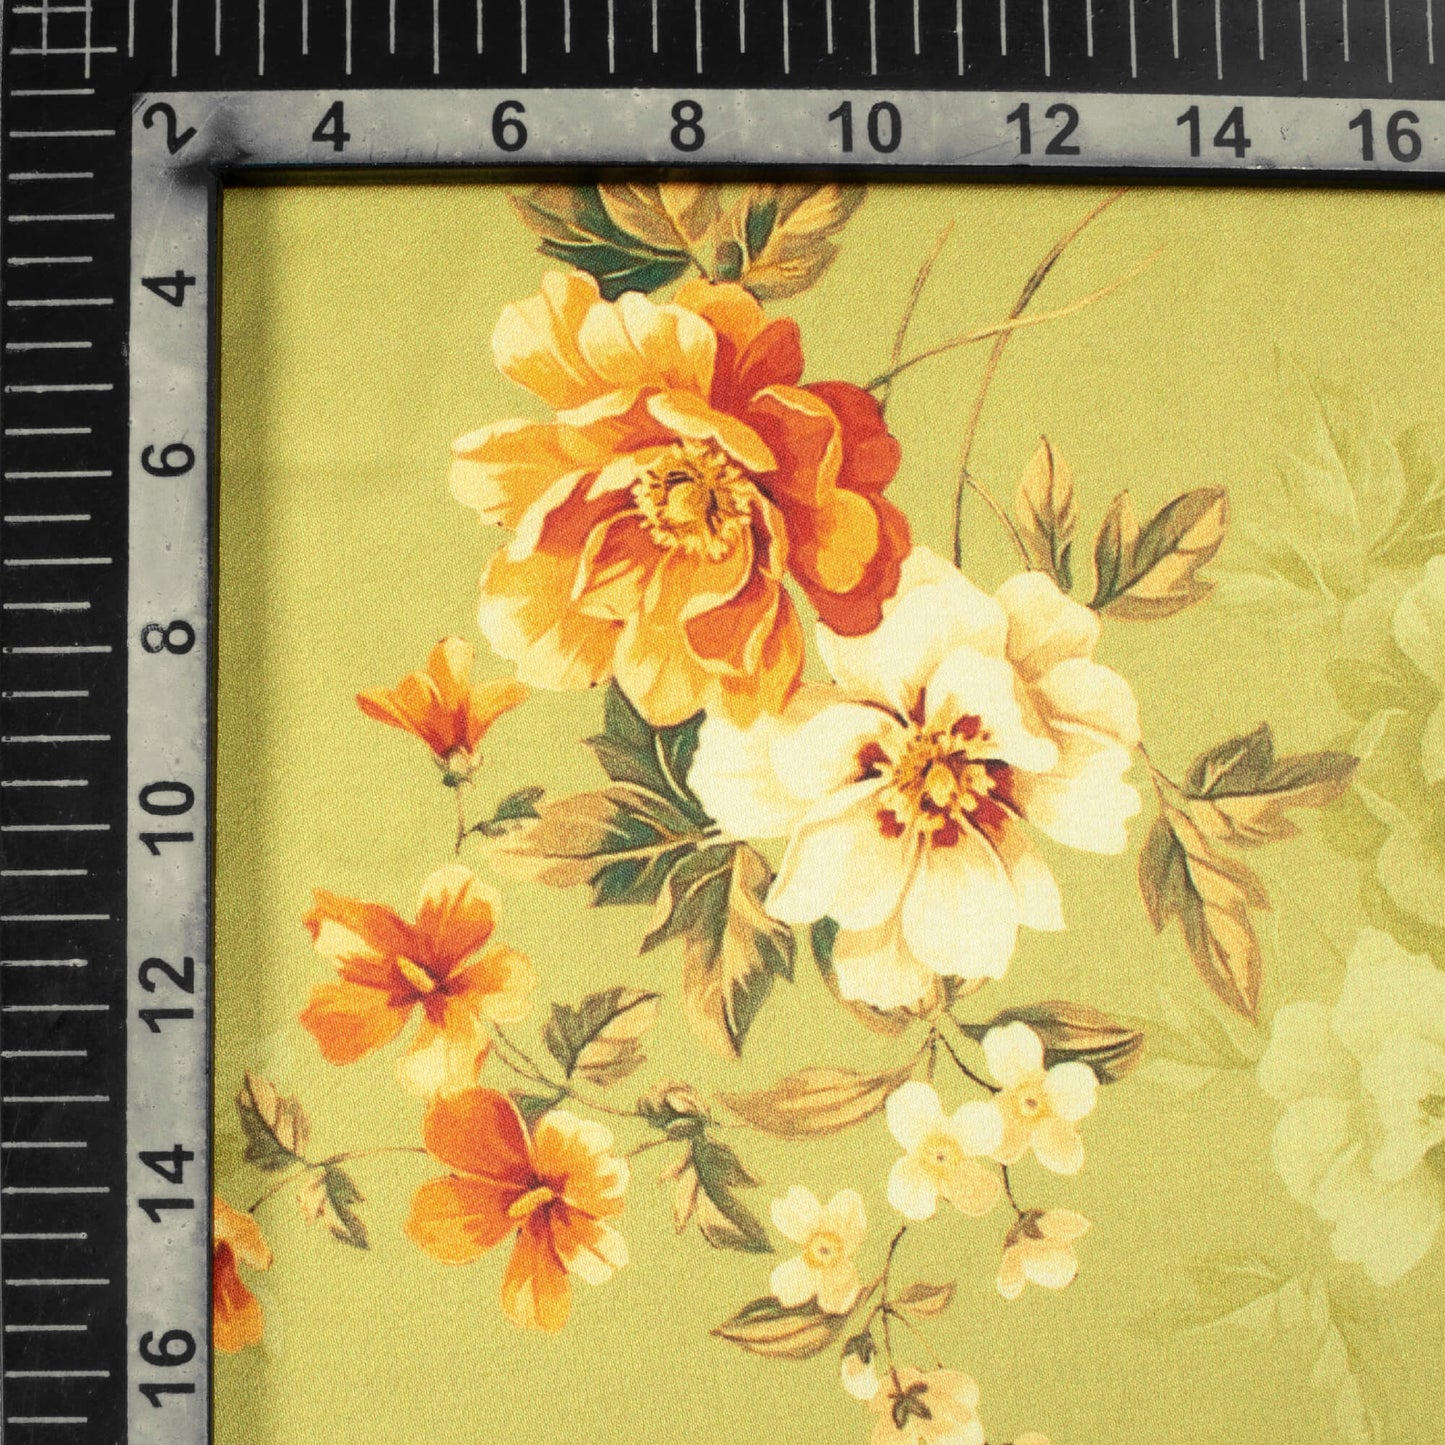 Moss Green And Spice Orange Floral Pattern Digital Print Premium Lush Satin Fabric